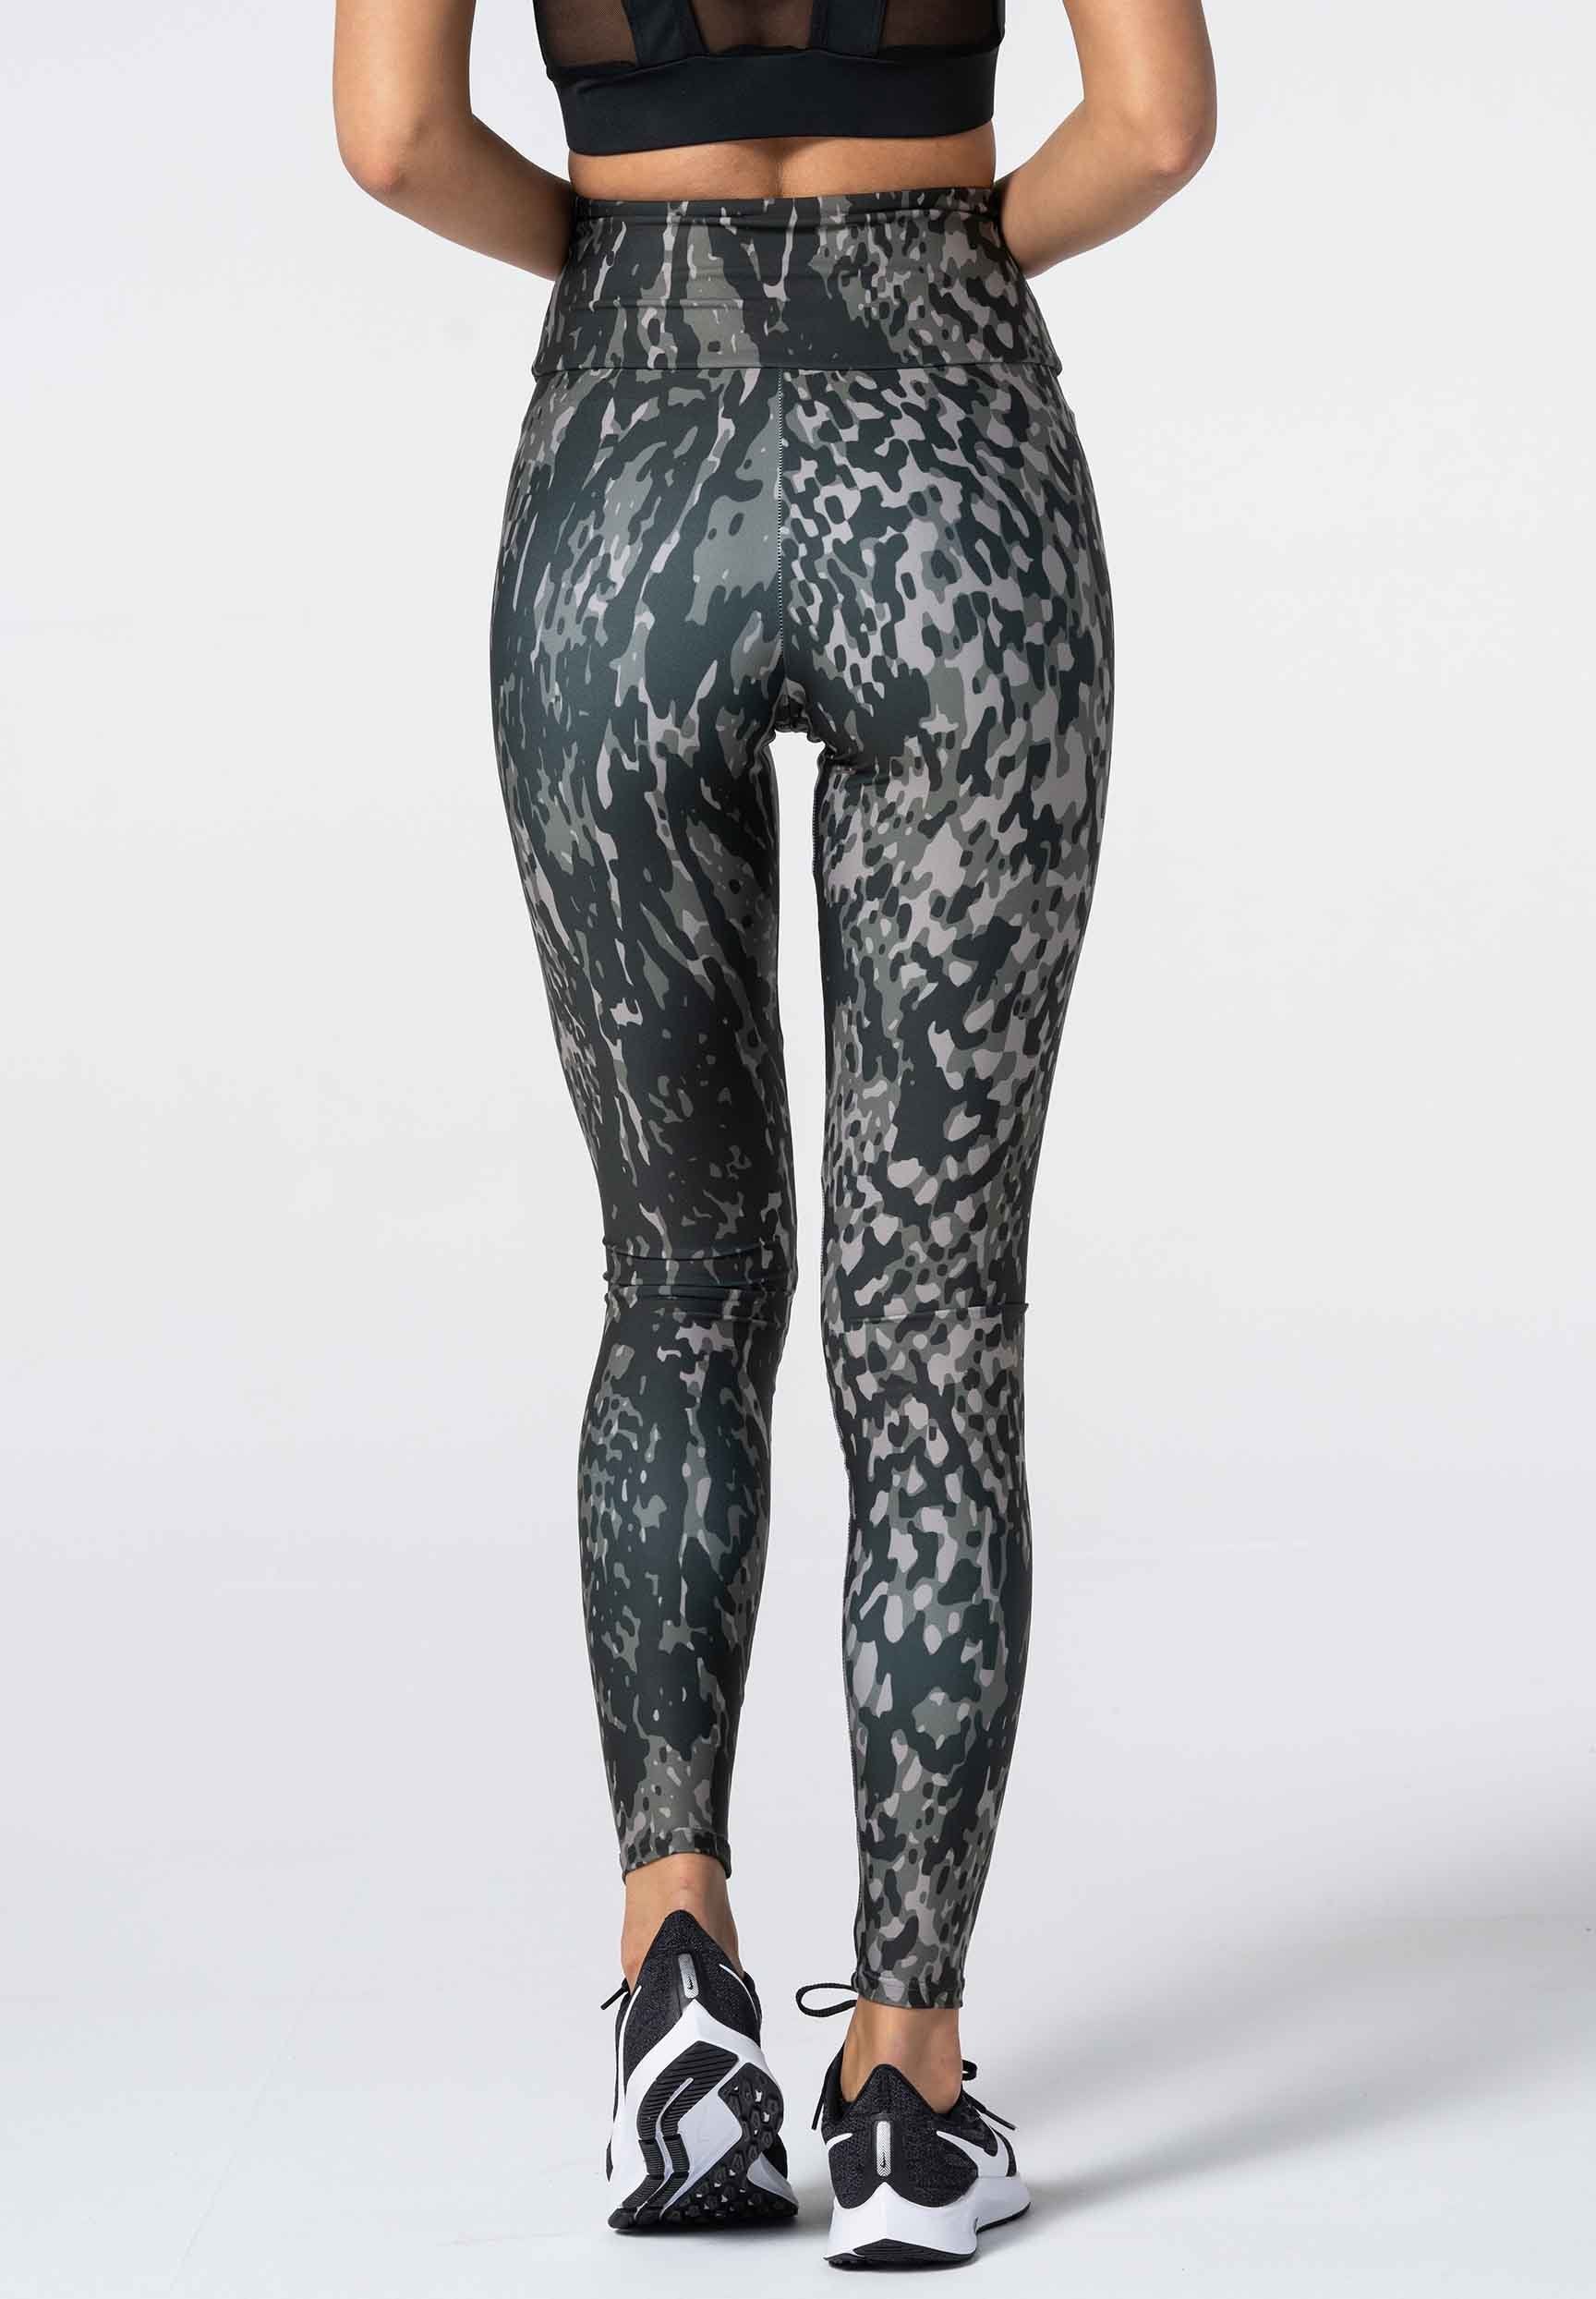 Carpatree high waisted printed leggings in grey snake skin pattern